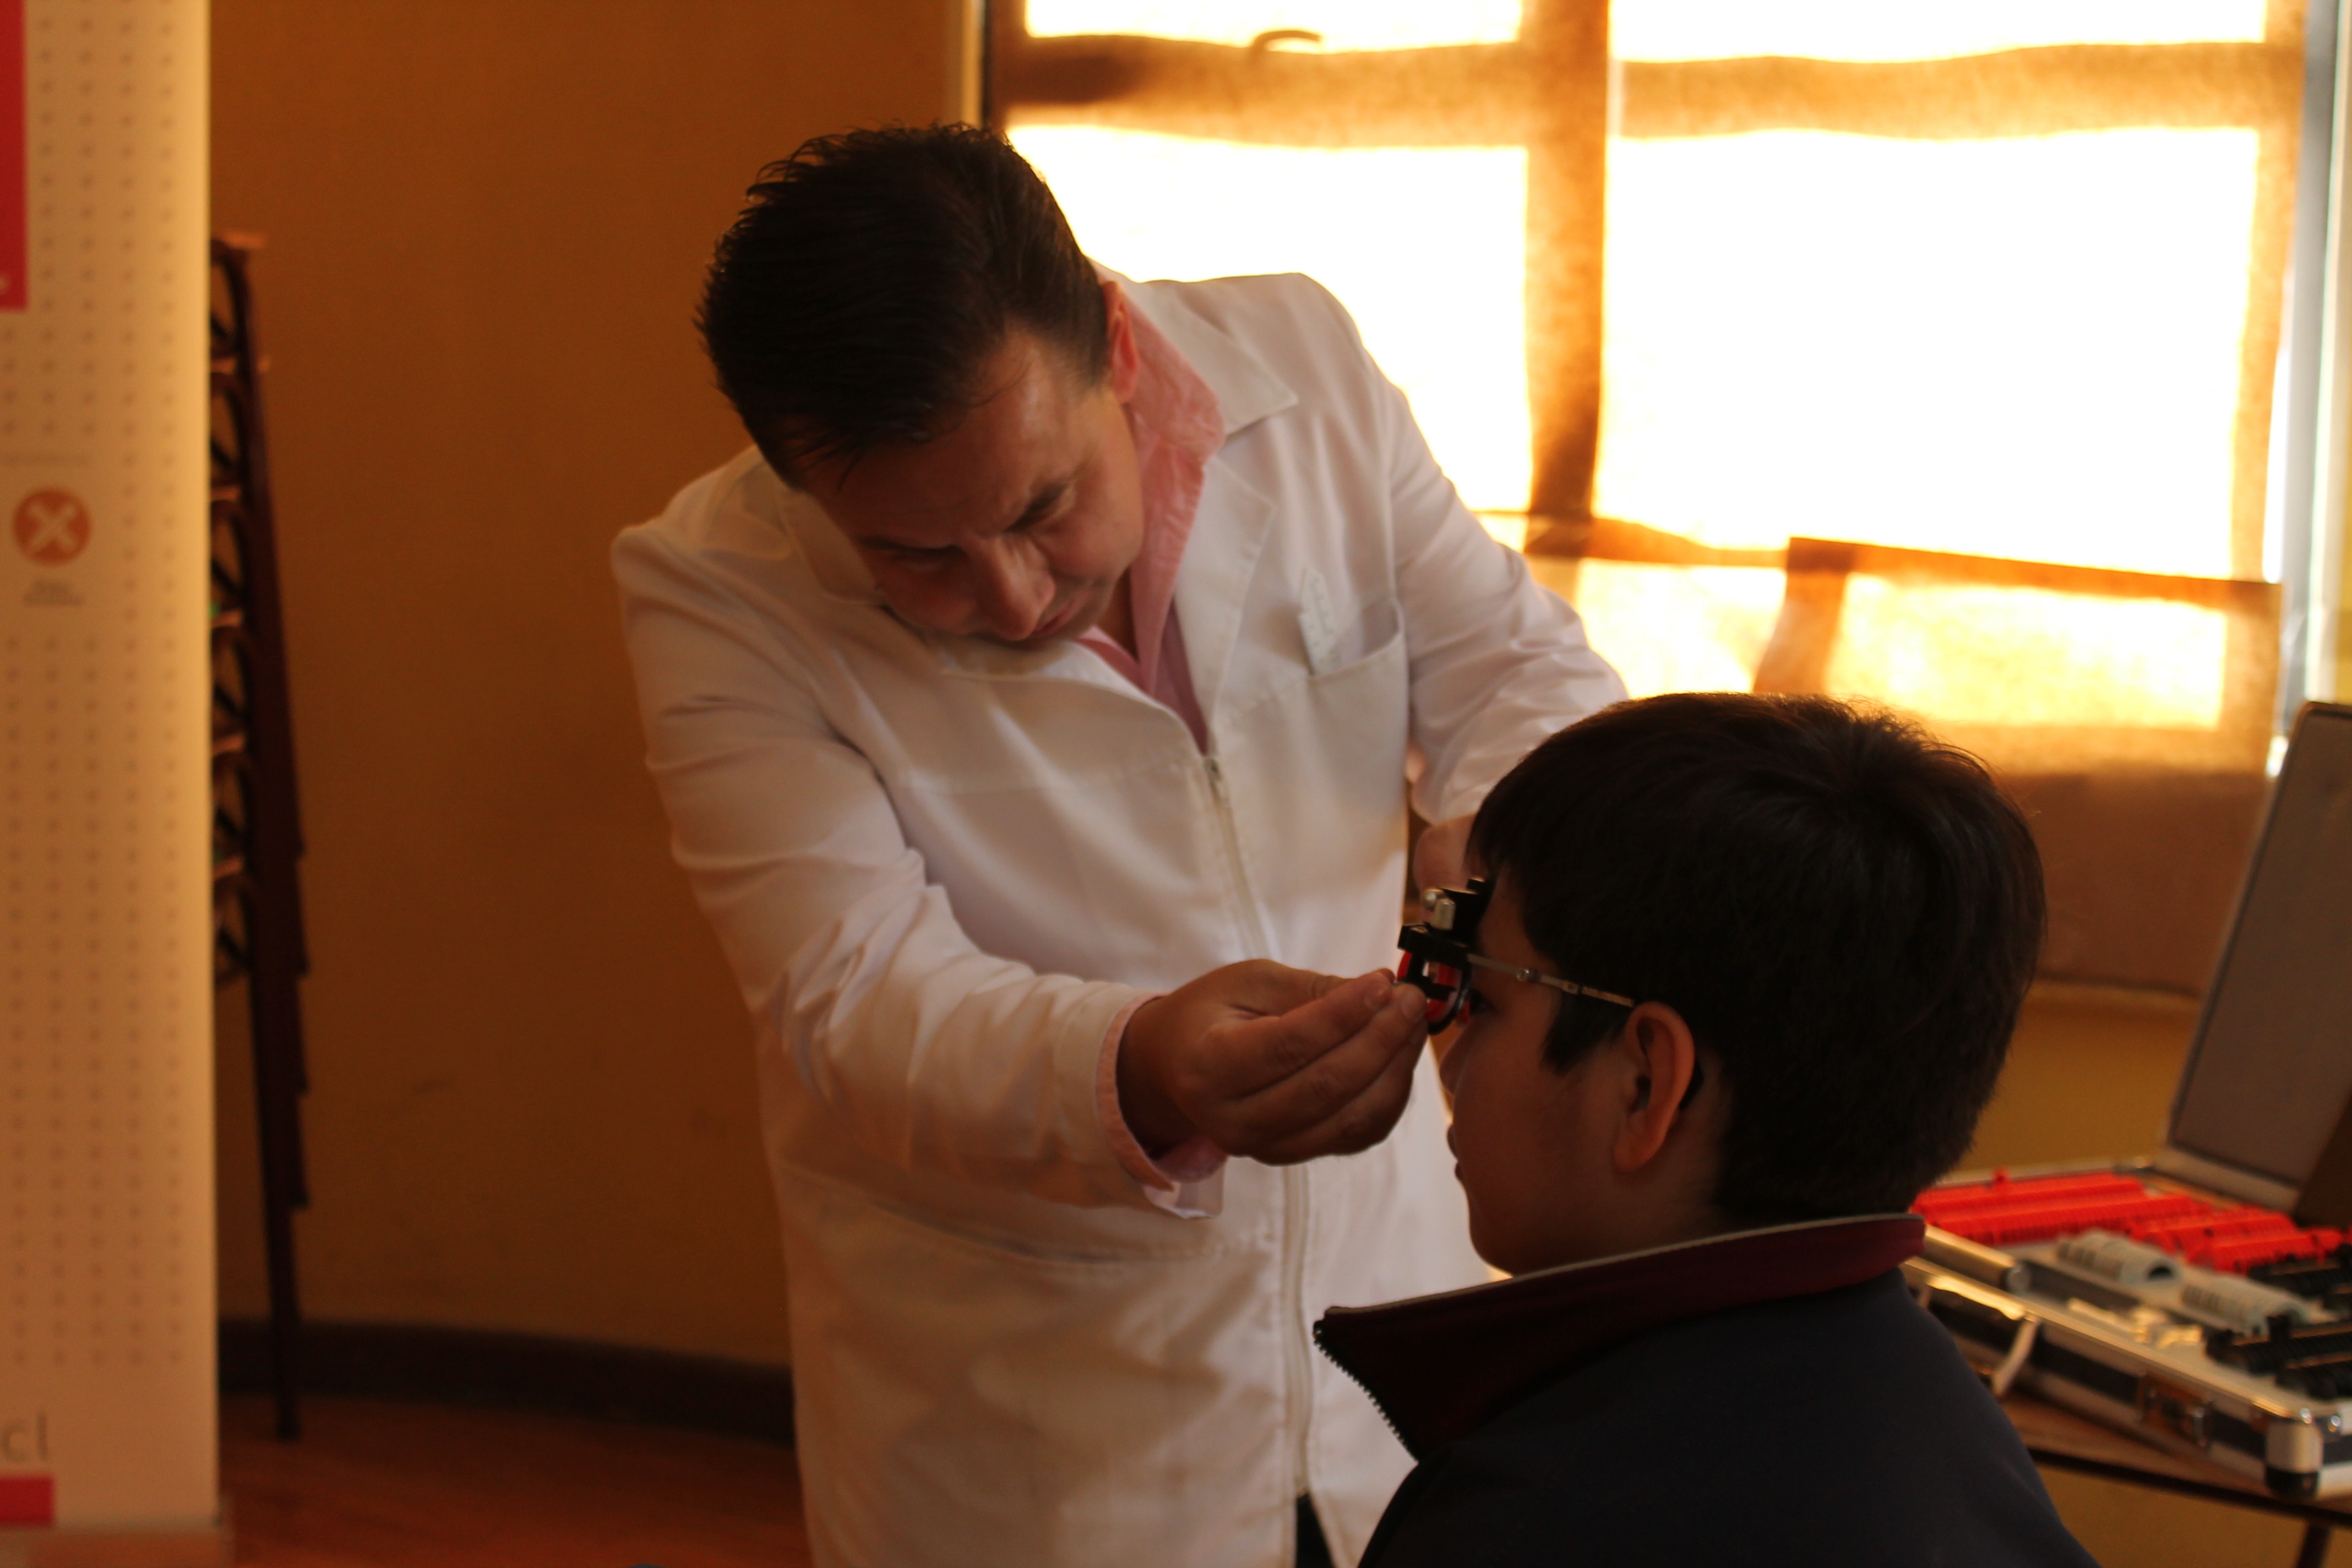 Seremi de Educación valora entrega gratuita de lentes a 500 estudiantes de Magallanes